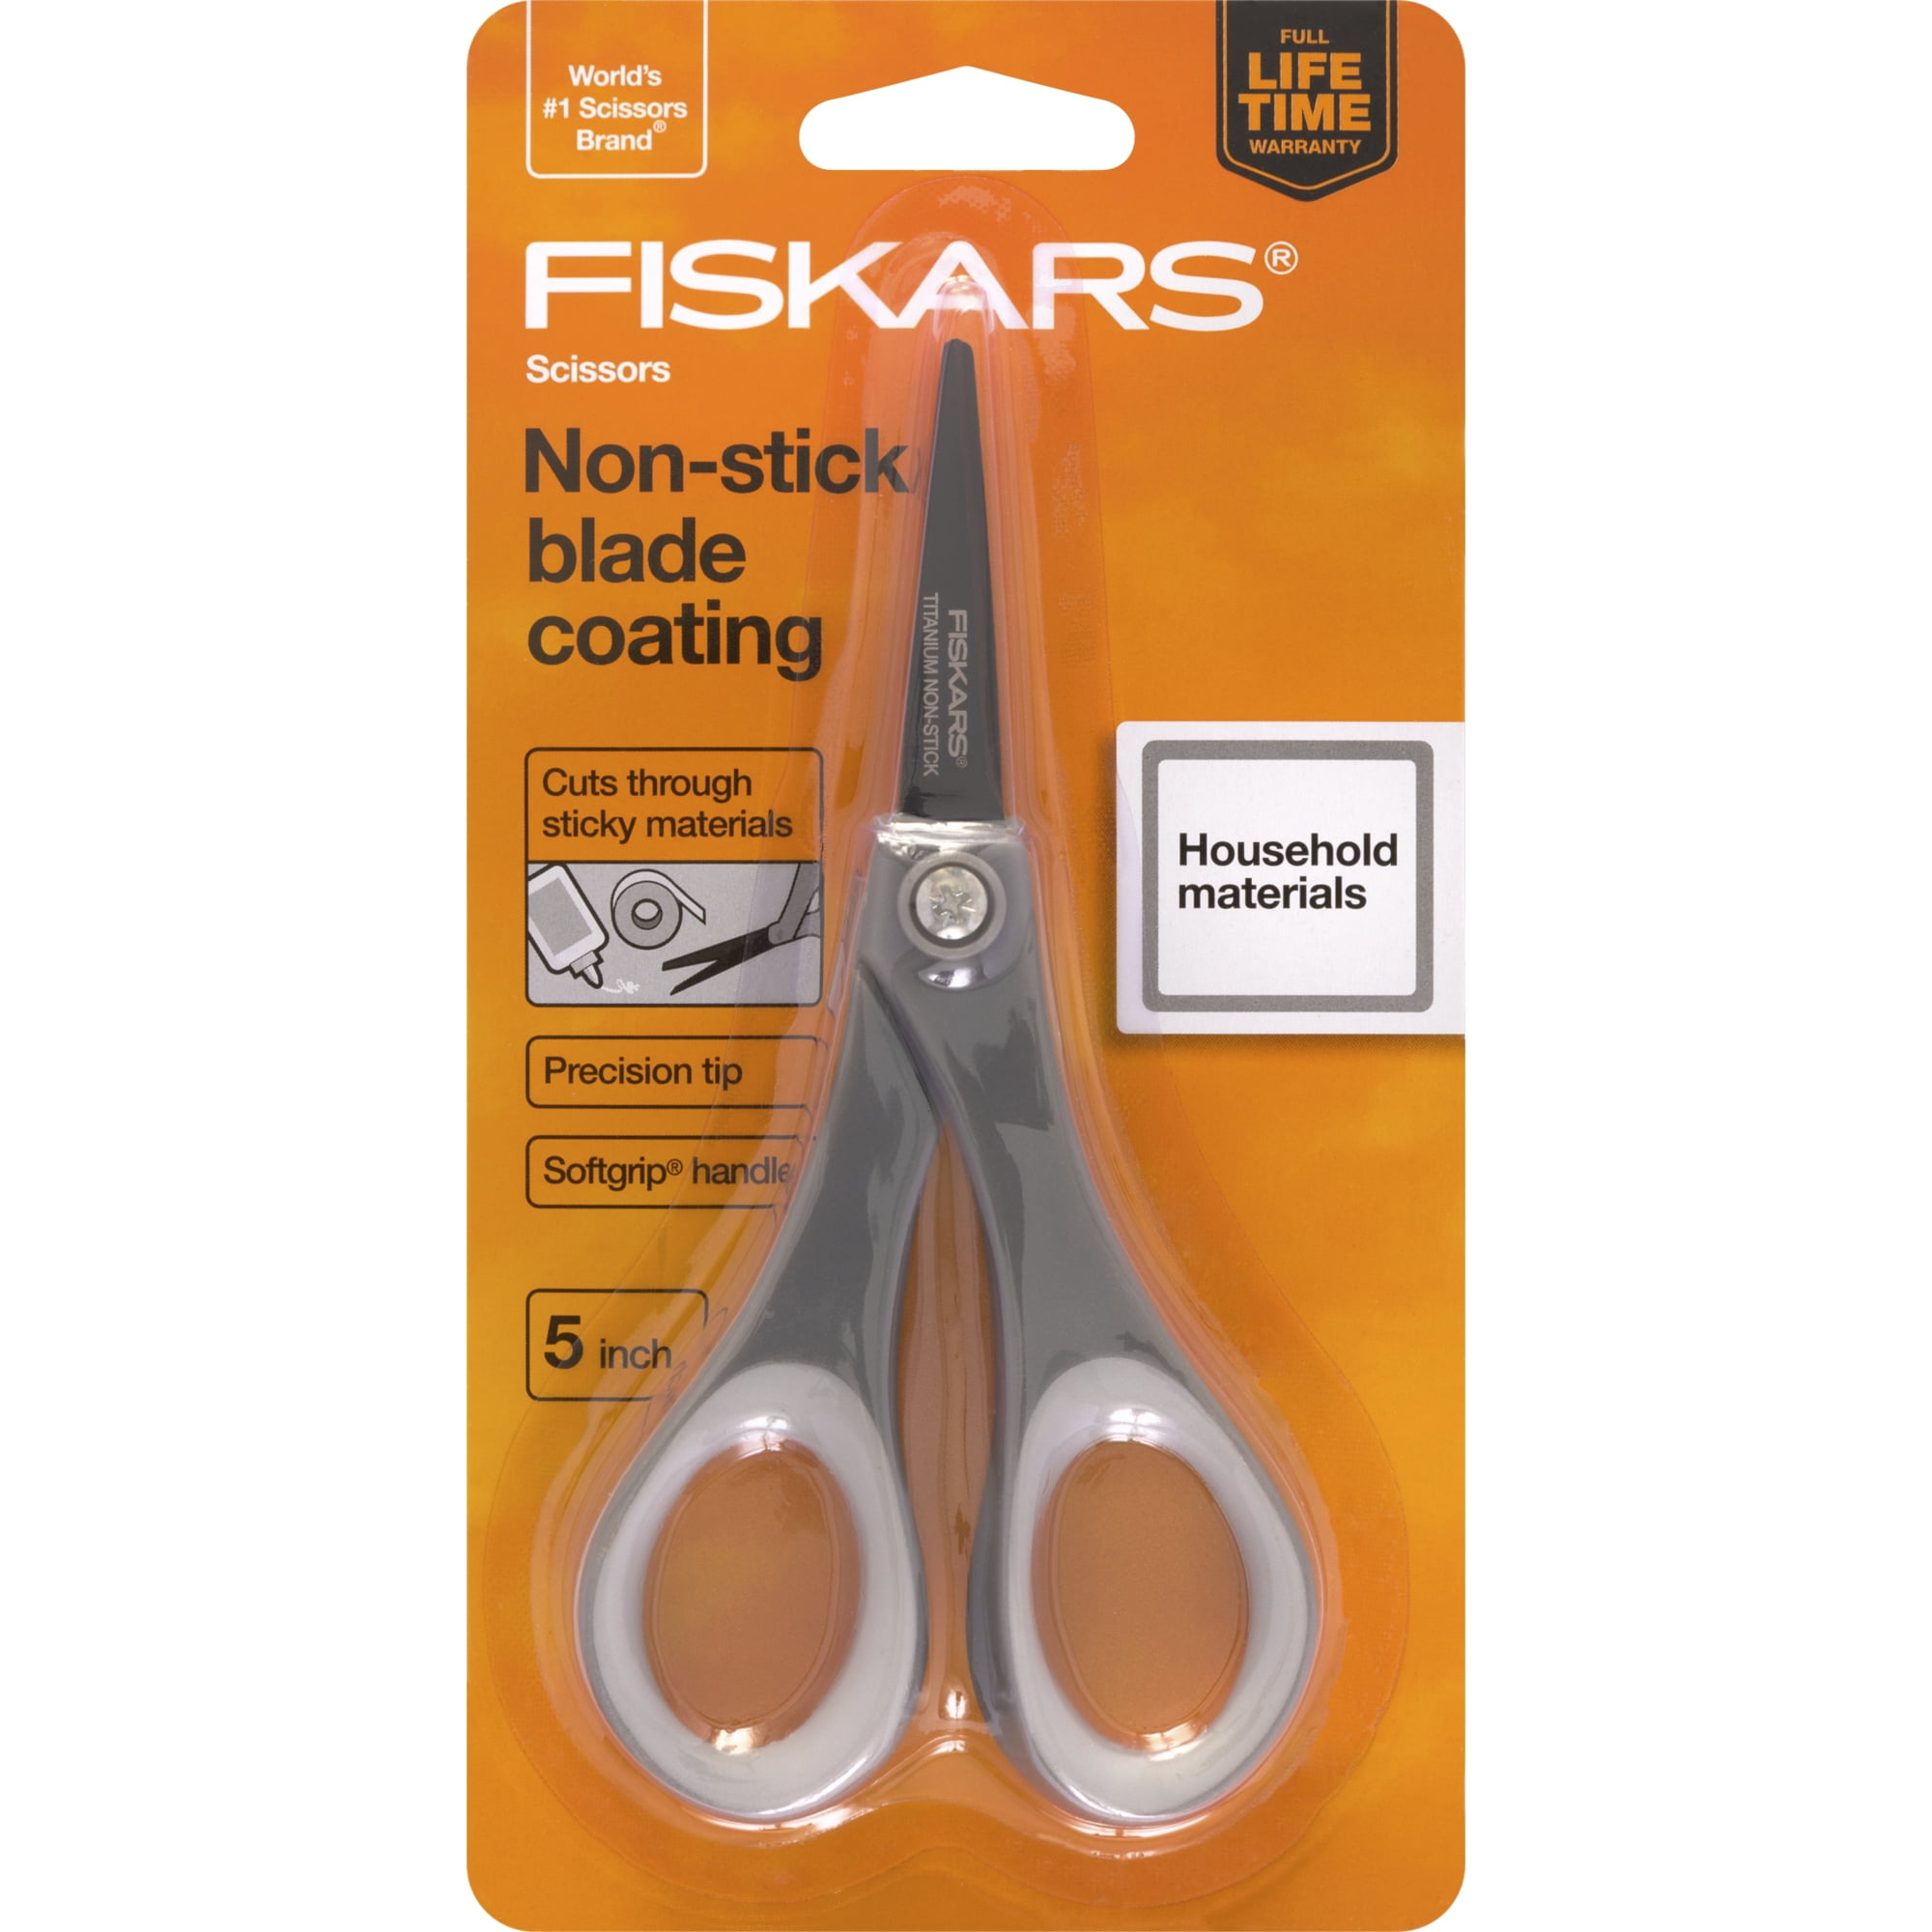  Fiskars 99947097J 5-Inch Non-stick Blade coated Scissors